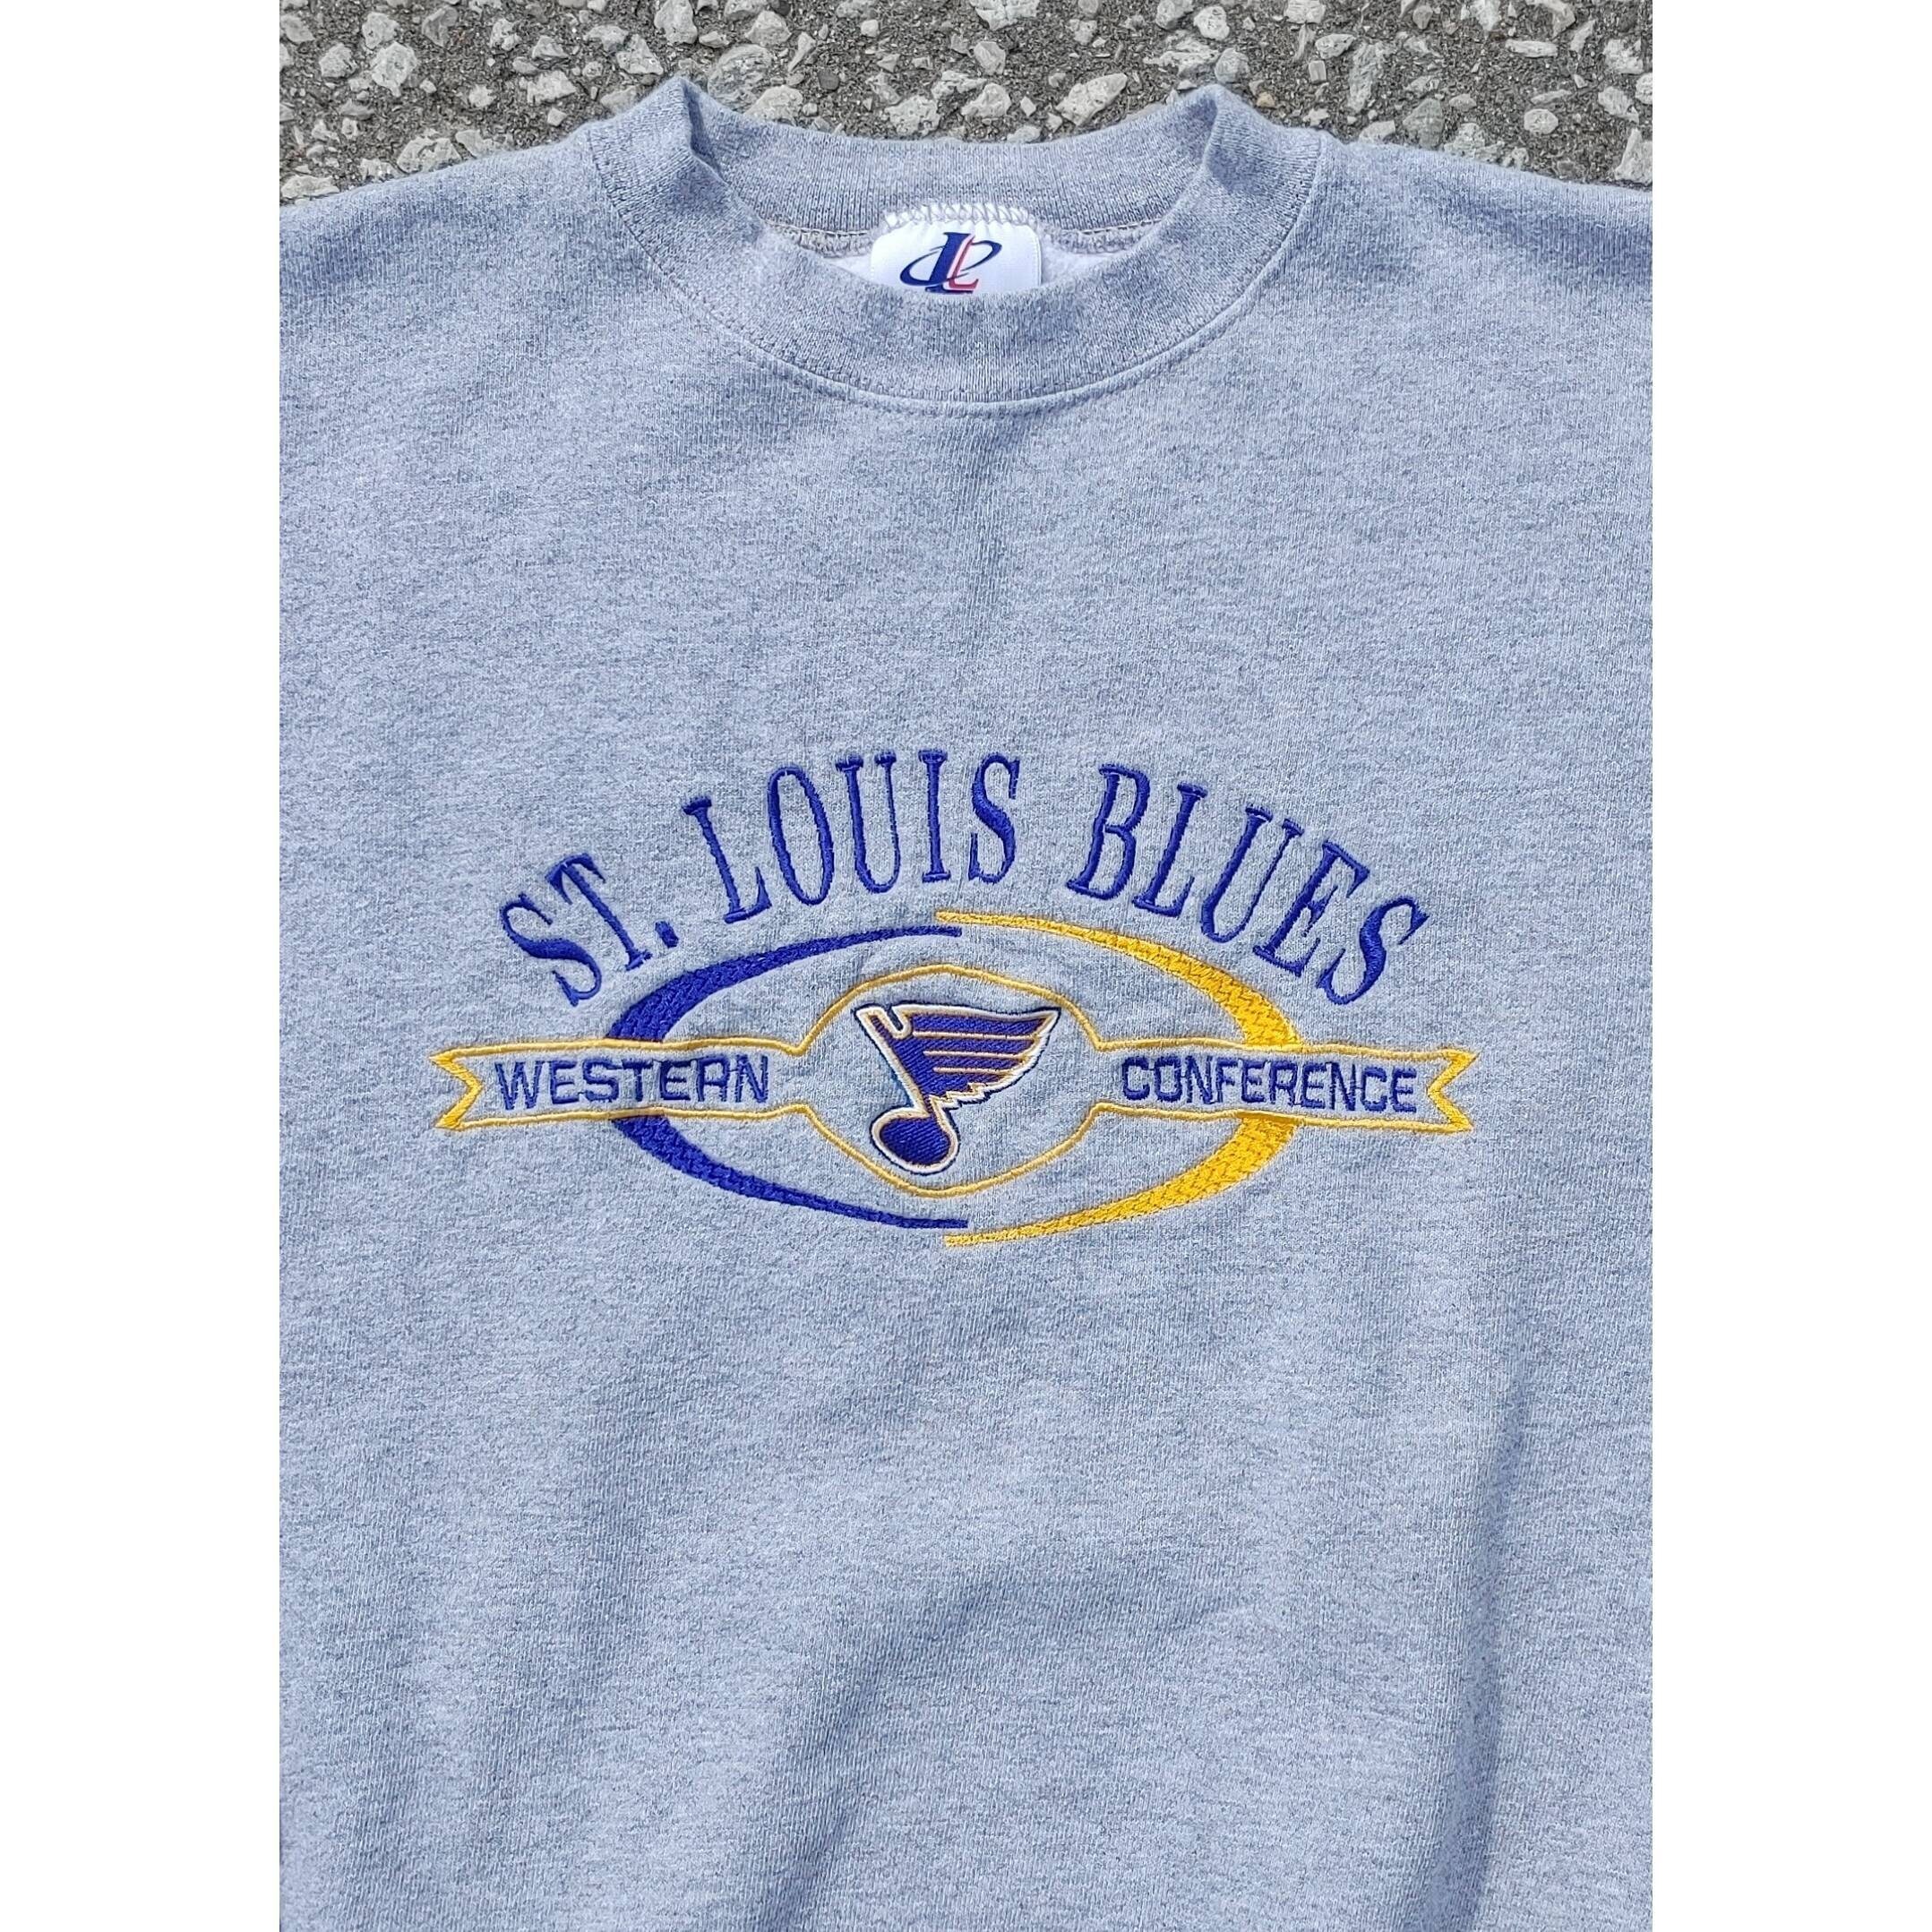 NHL St. Louis Blues Custom Name Number Retro Jersey Fleece Oodie